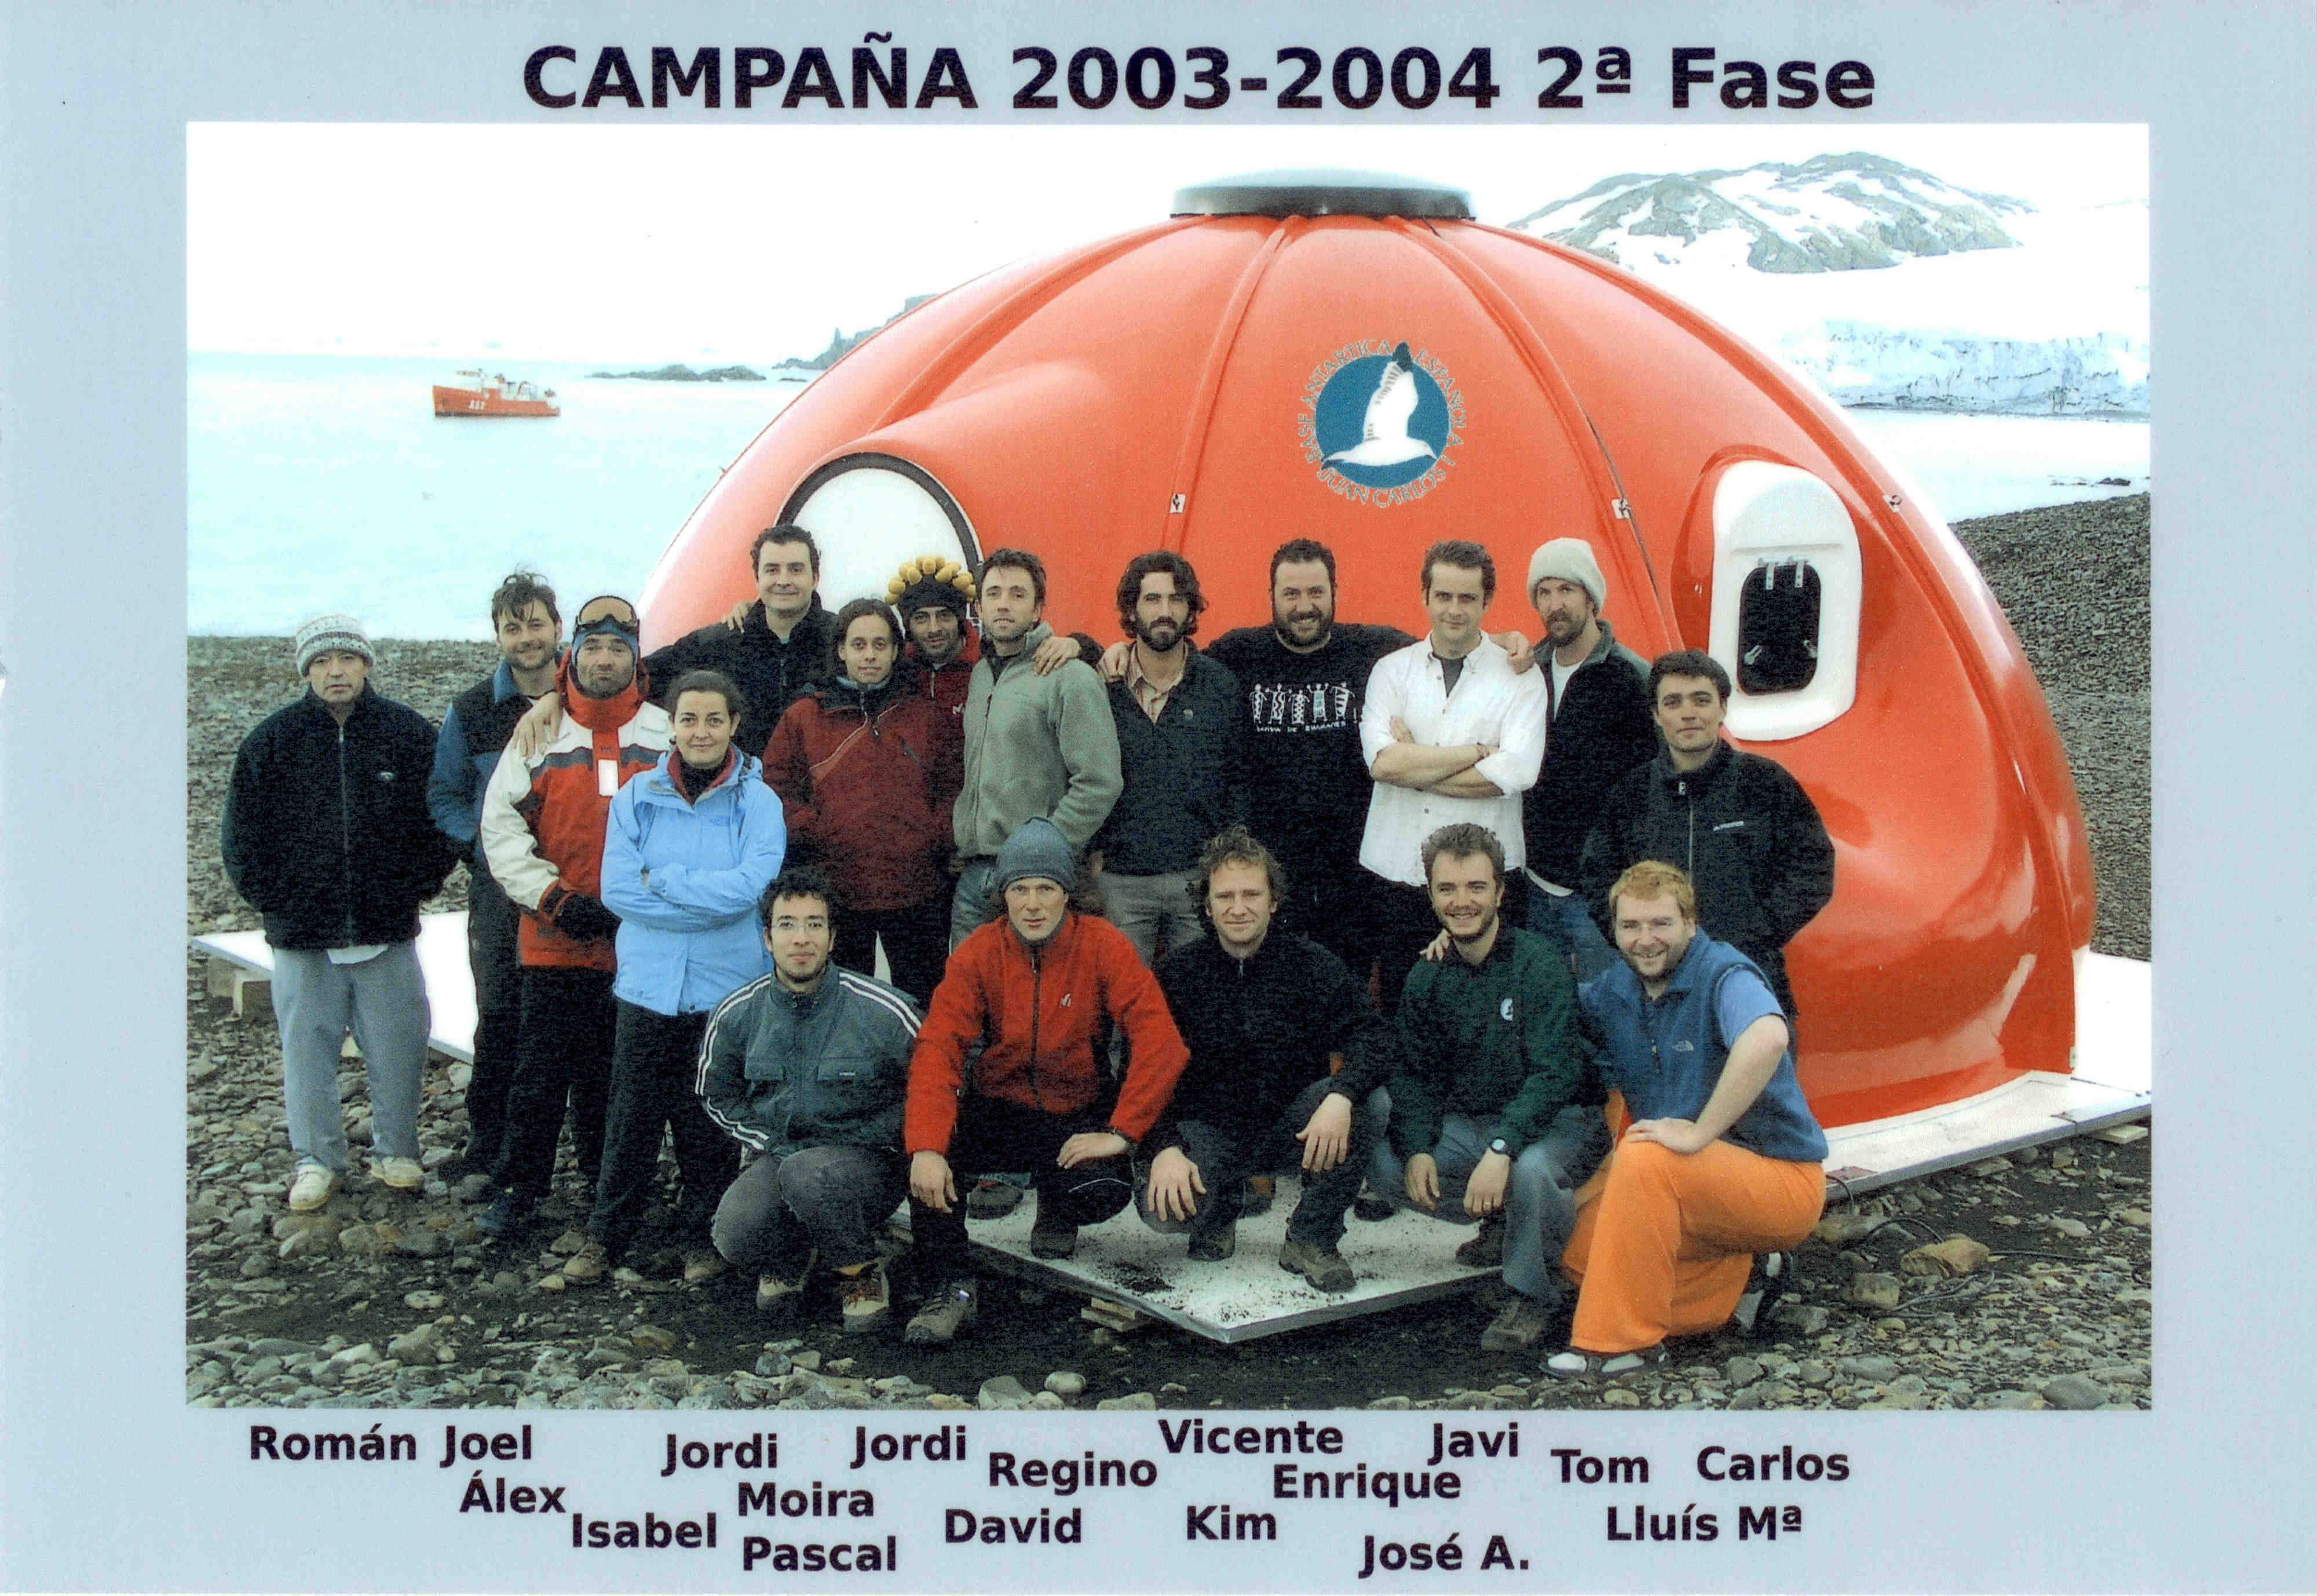 Foto Oficial 2003-2004 2ª Fase.jpg 